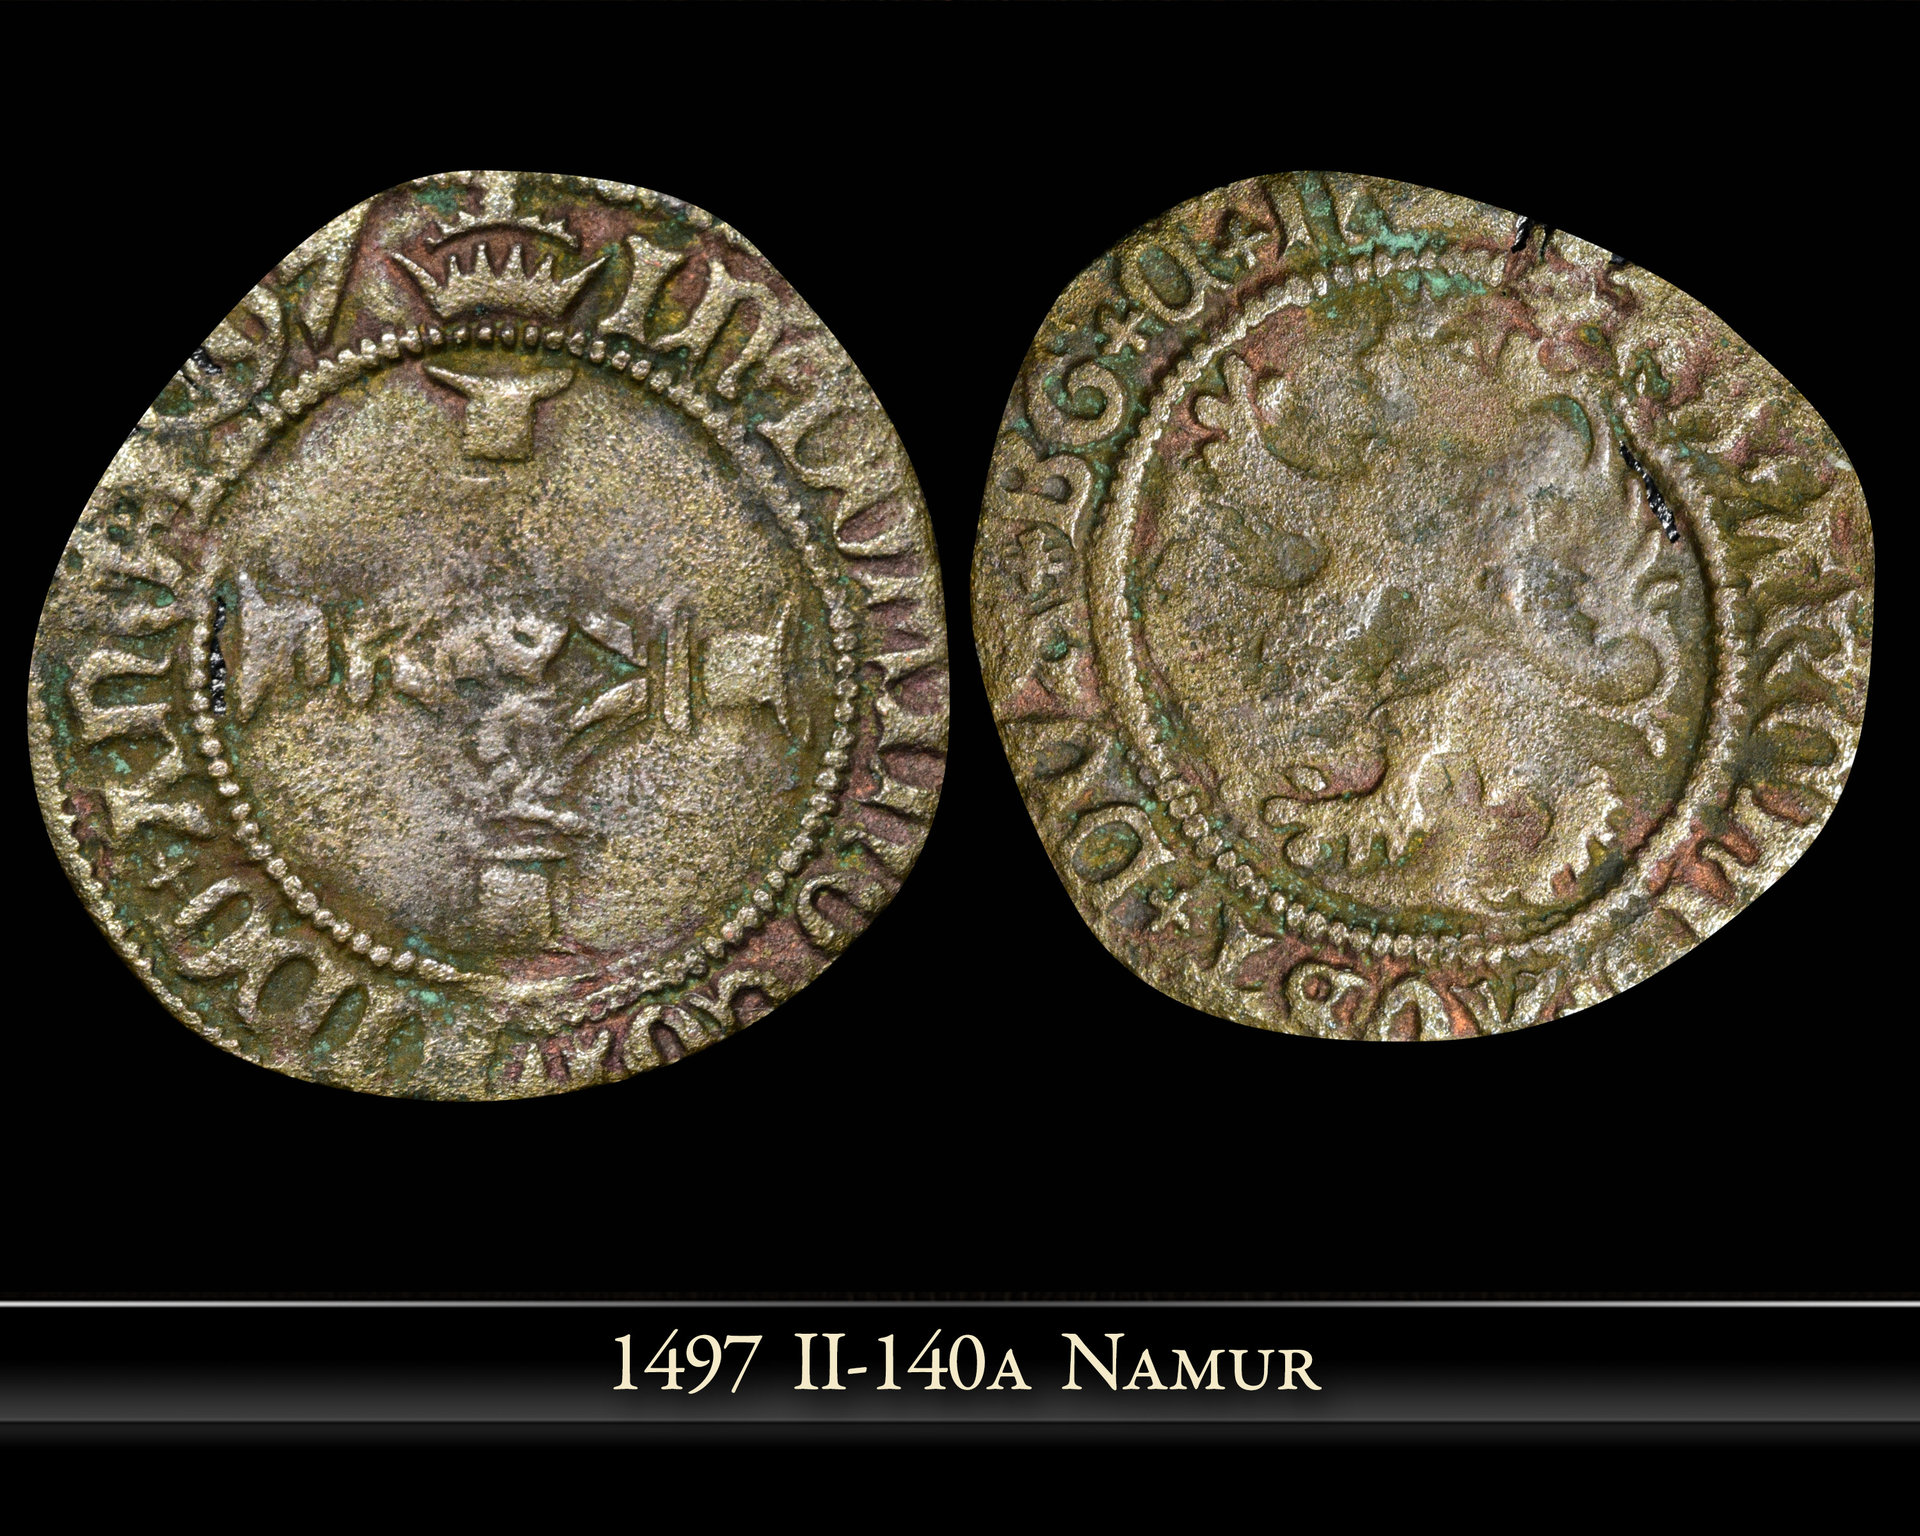 1497 - 11 - 140a - Namur Copper R - 2 copy.jpg